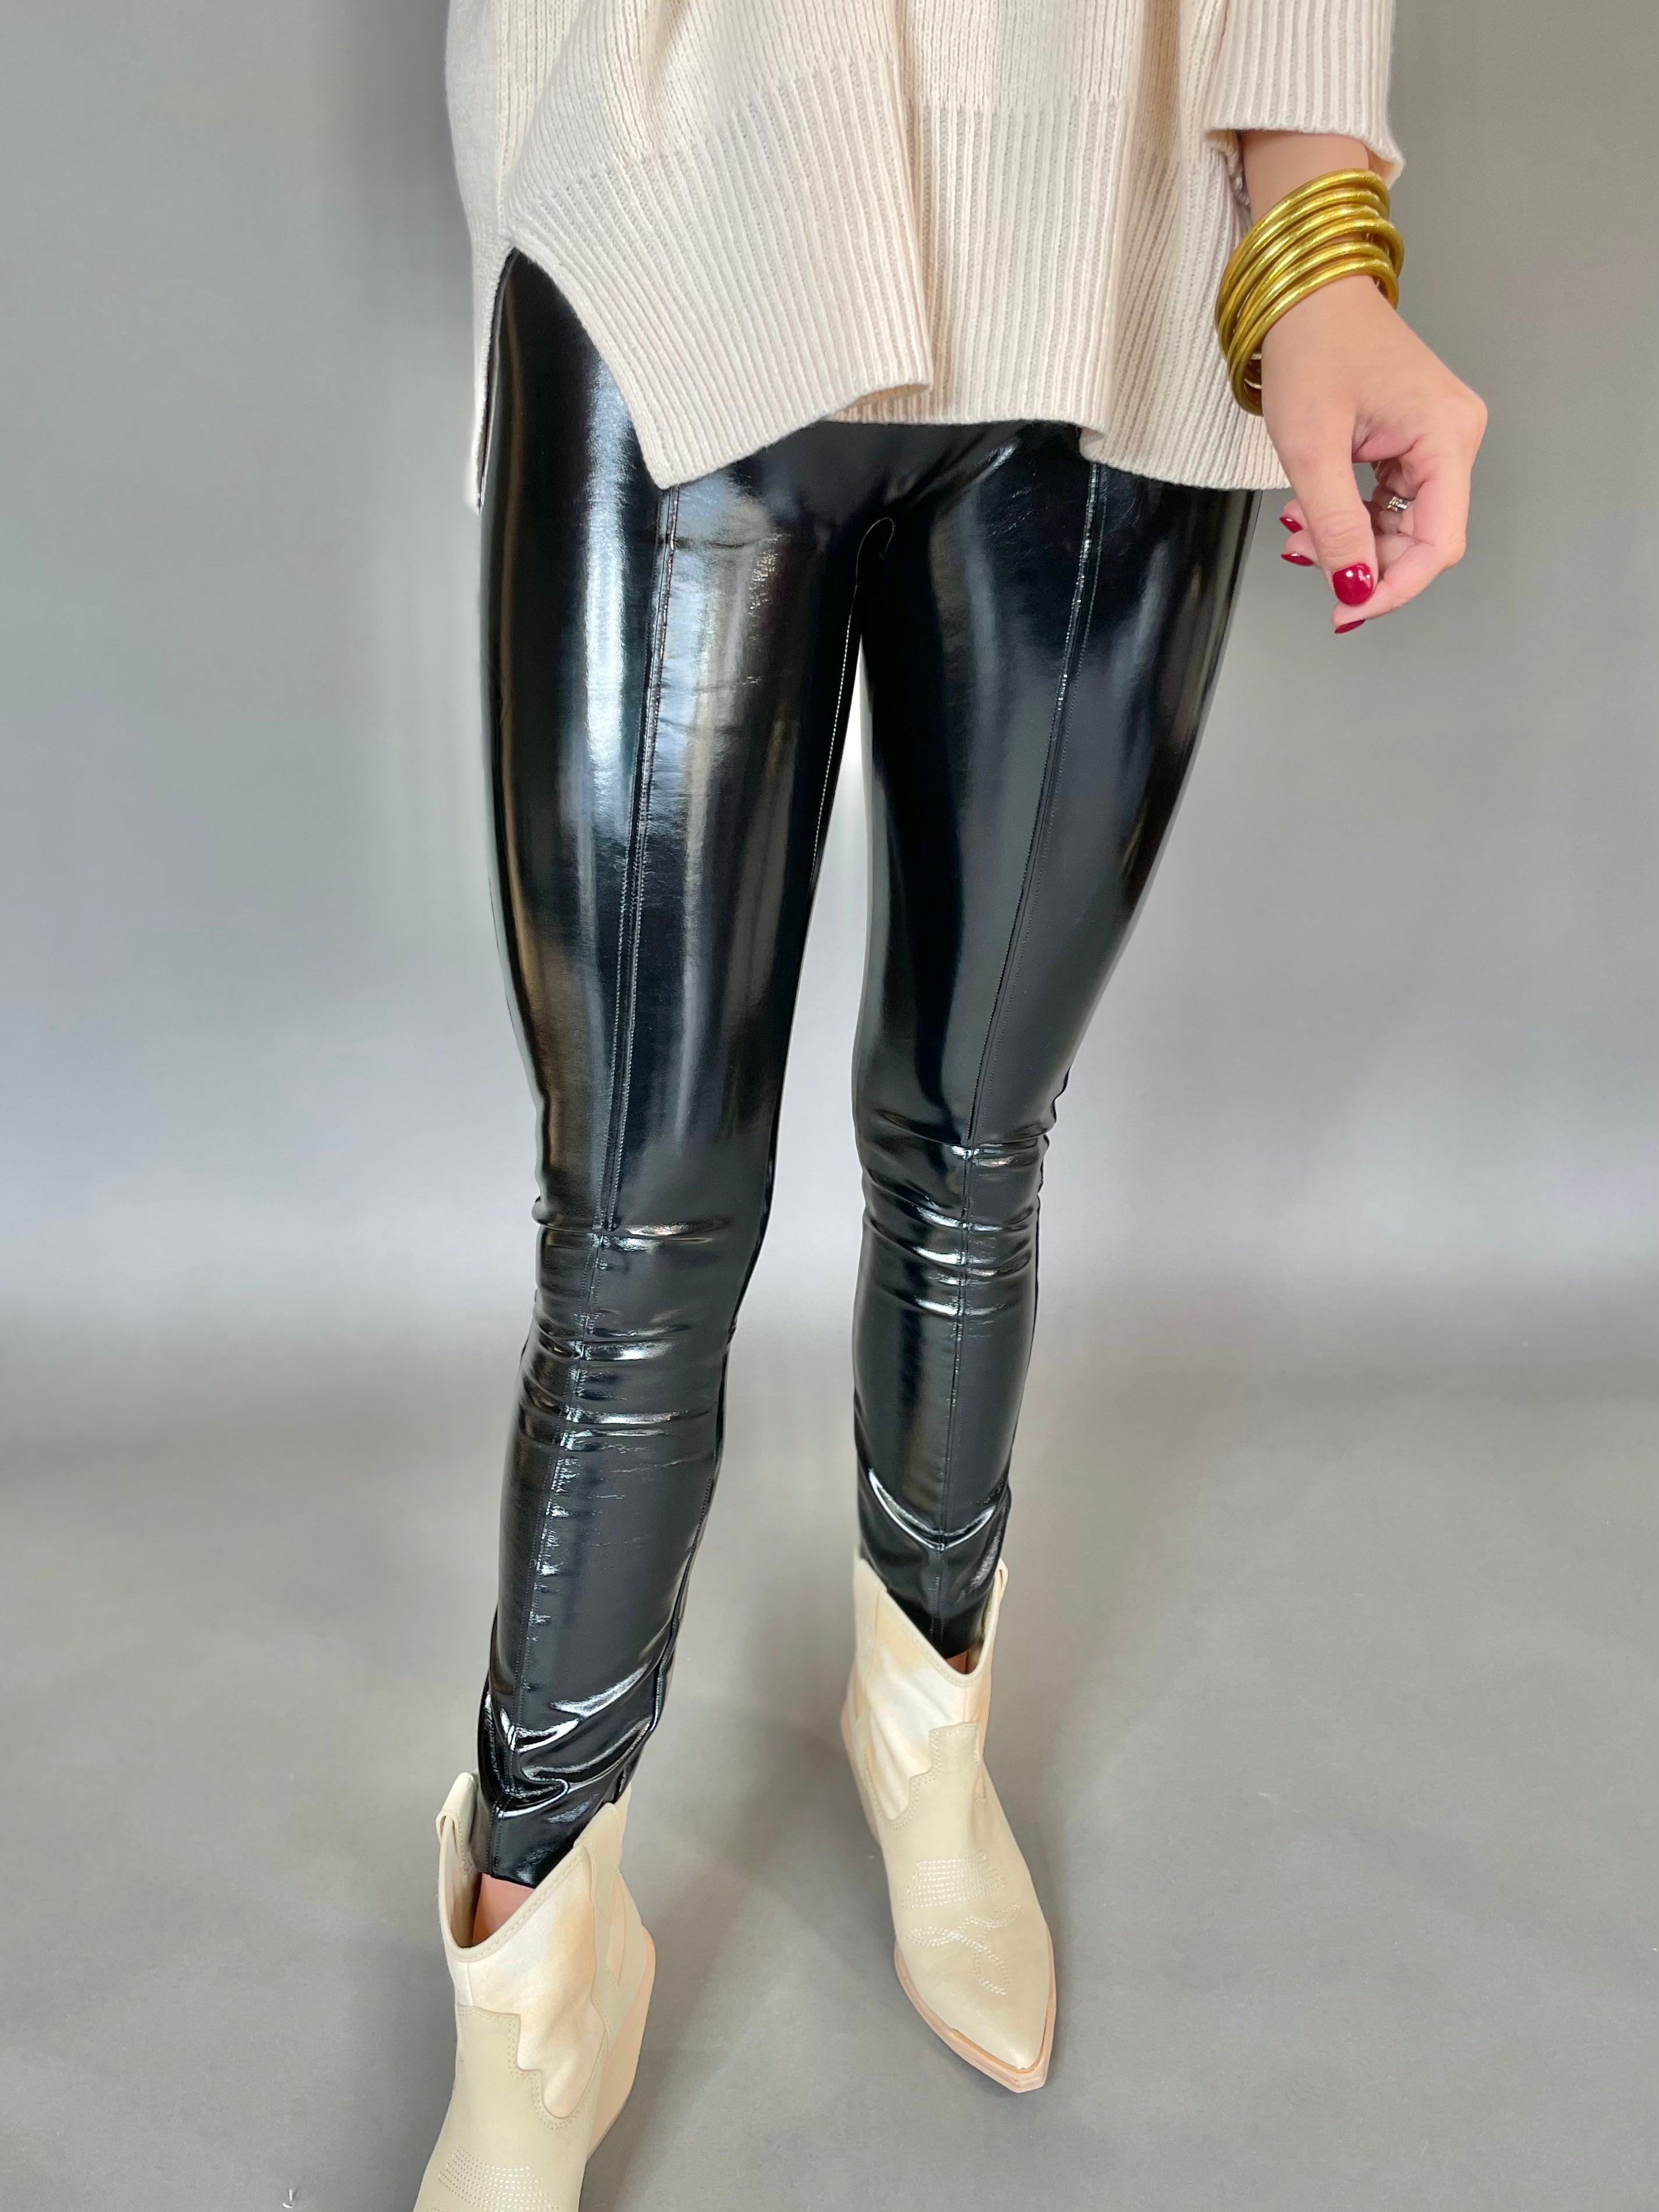 [Spanx] Patent Leather Leggings